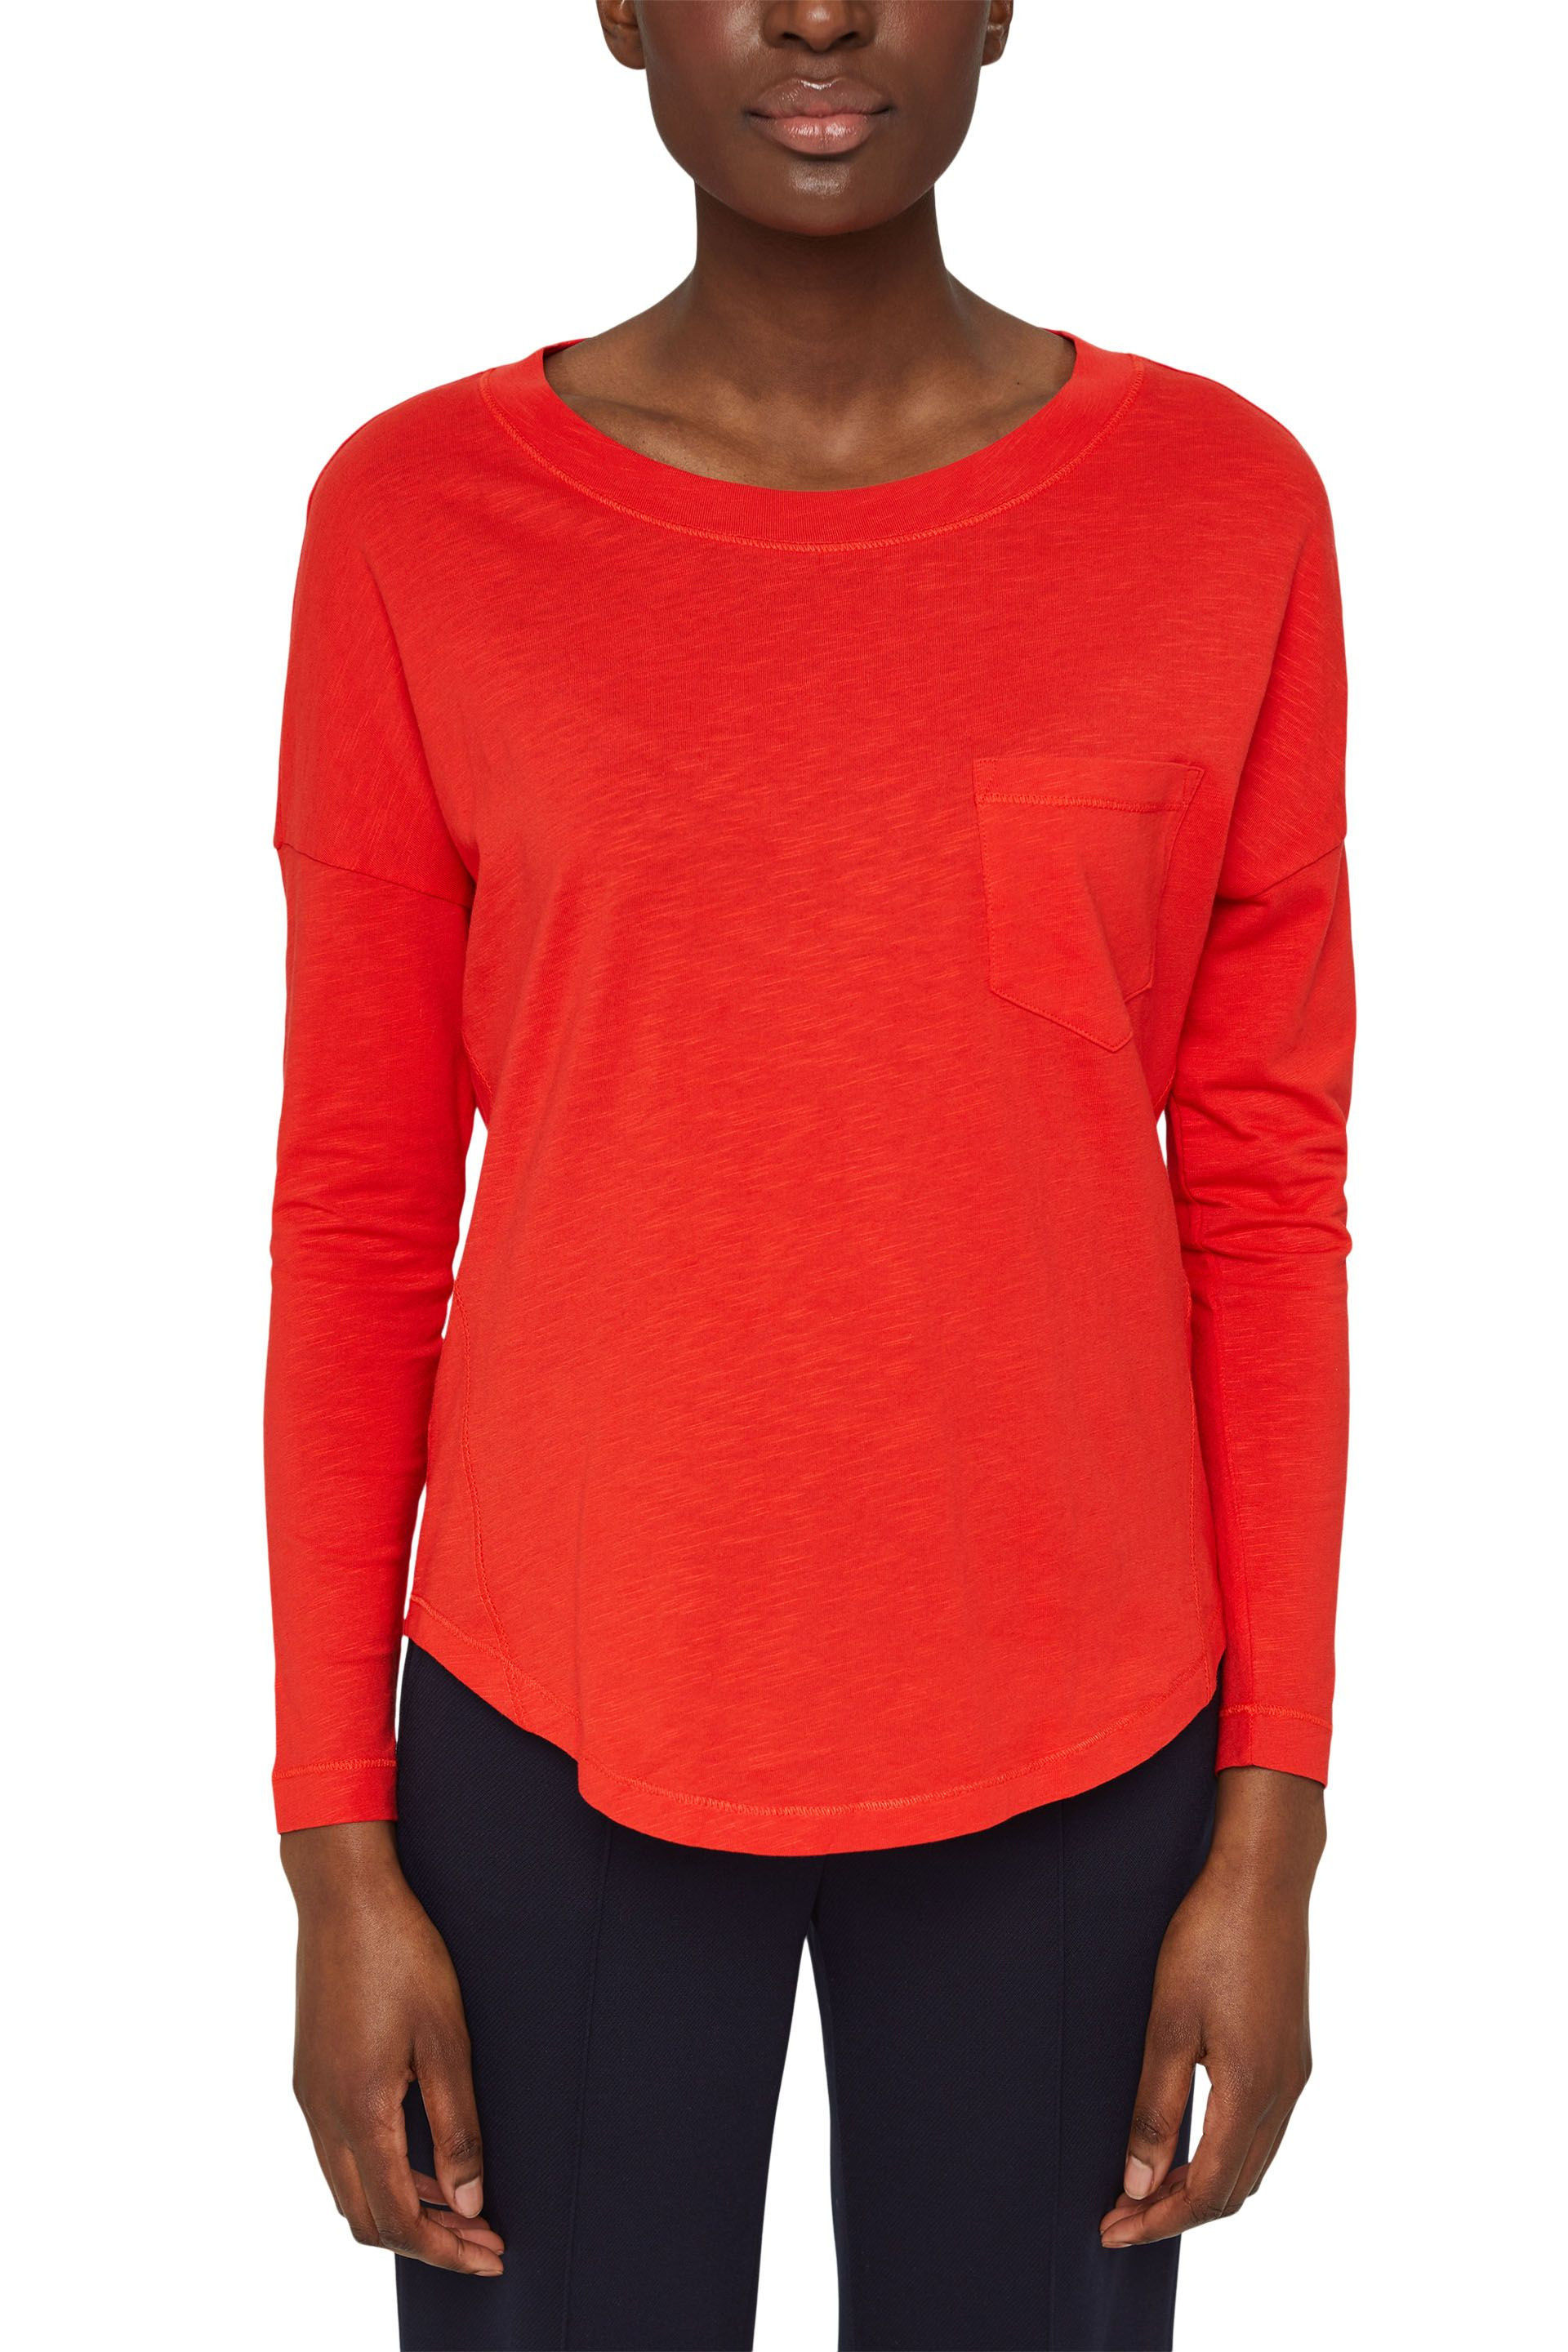 T-shirt a maniche lunghe con tasca, Arancione, large image number 1